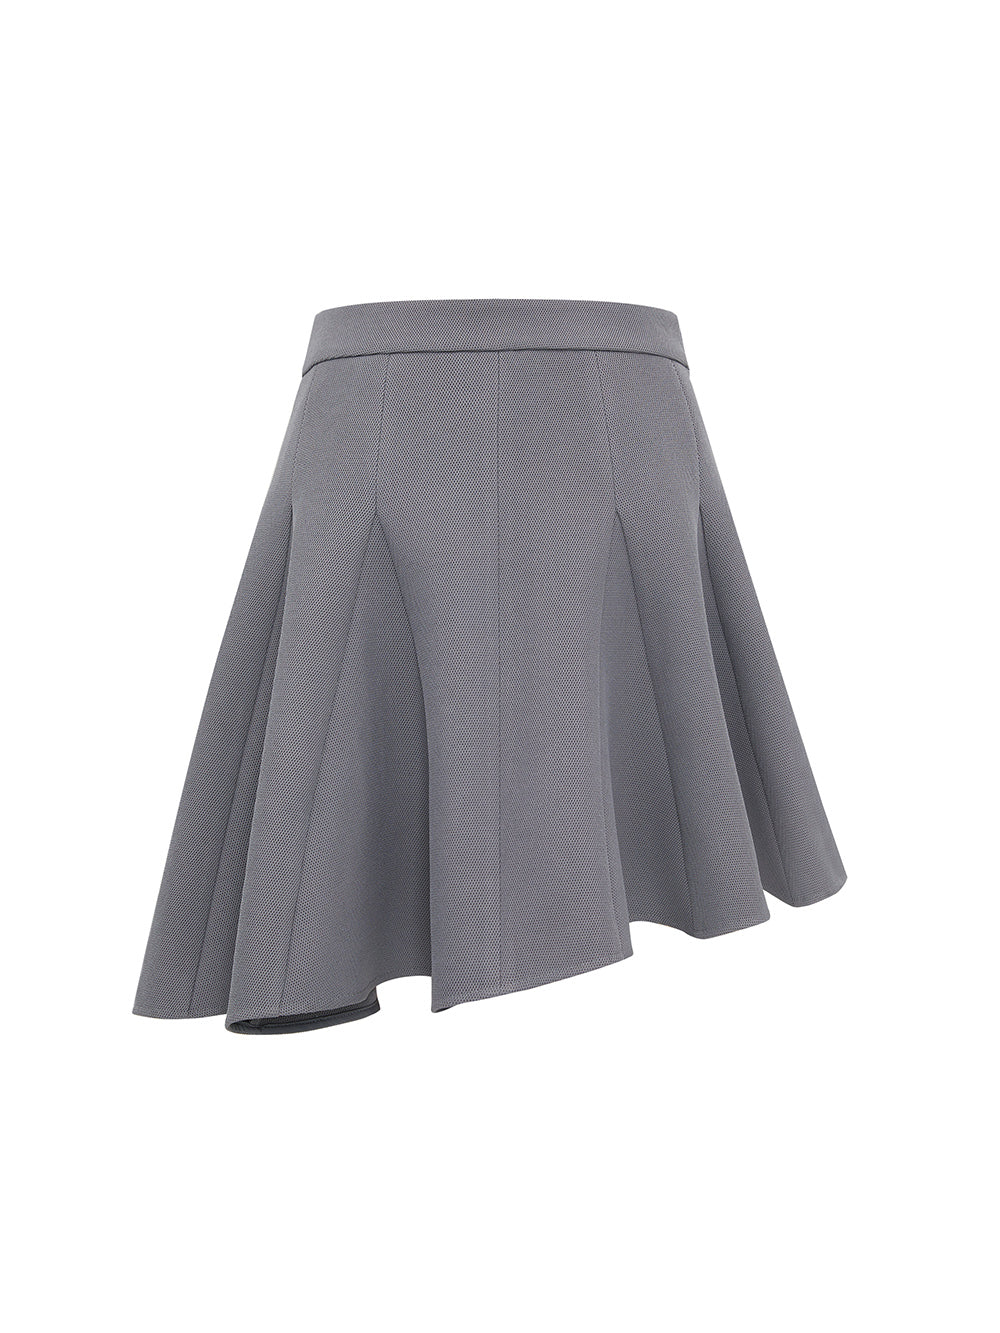 MUKZIN Gray Versatile Slim Fashion Irregular Skirt